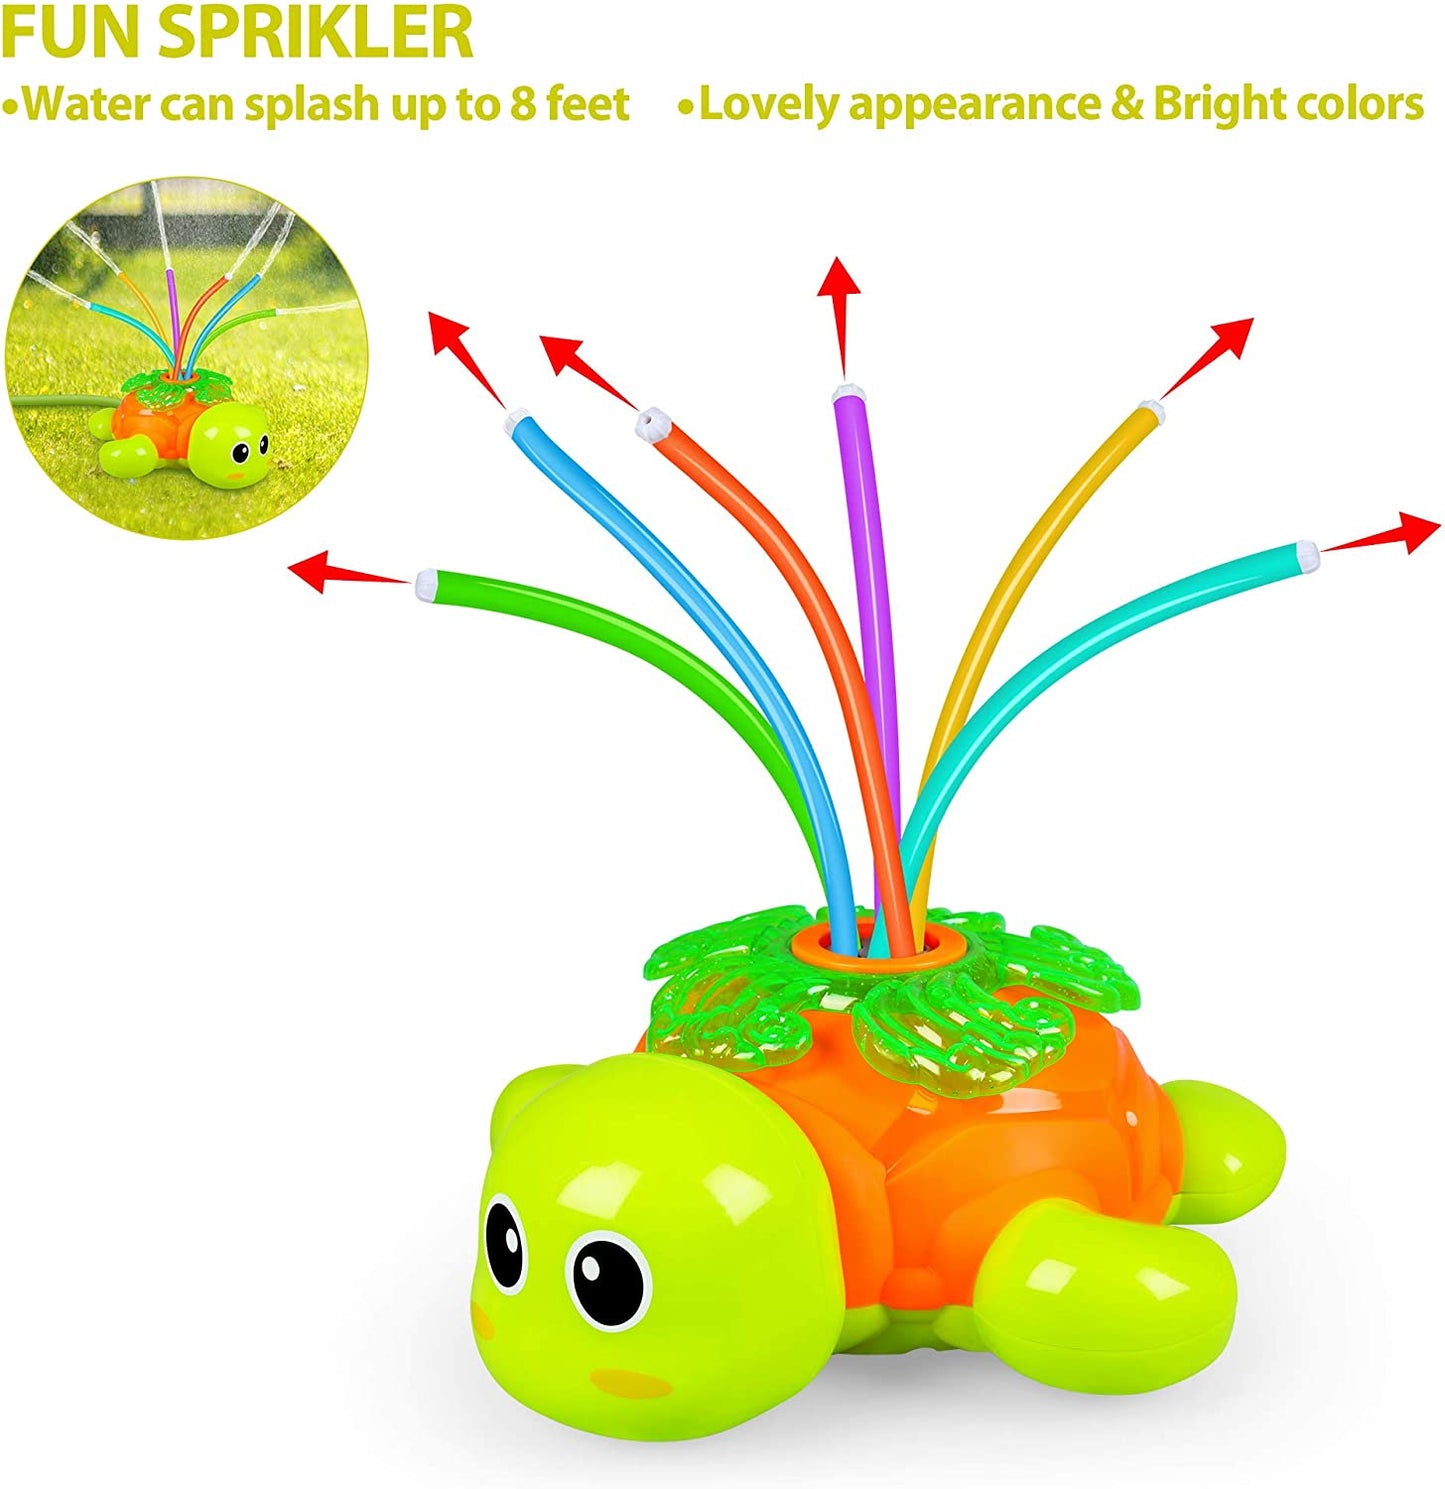  Backyard Rotating Turtle Sprinkler with Swing Tube - Splashing Toy for Summer 